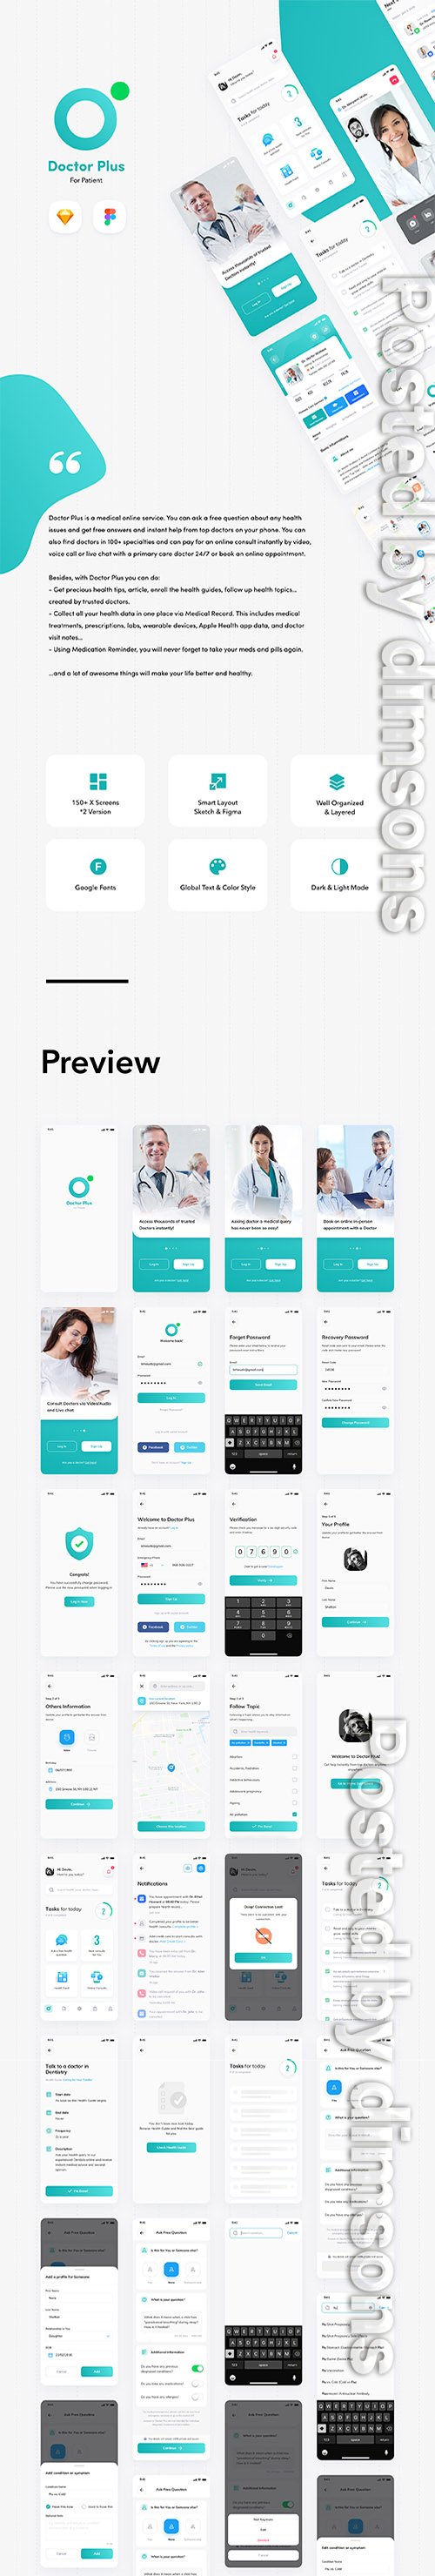 Doctor Plus - For Patient iOS UI Kit